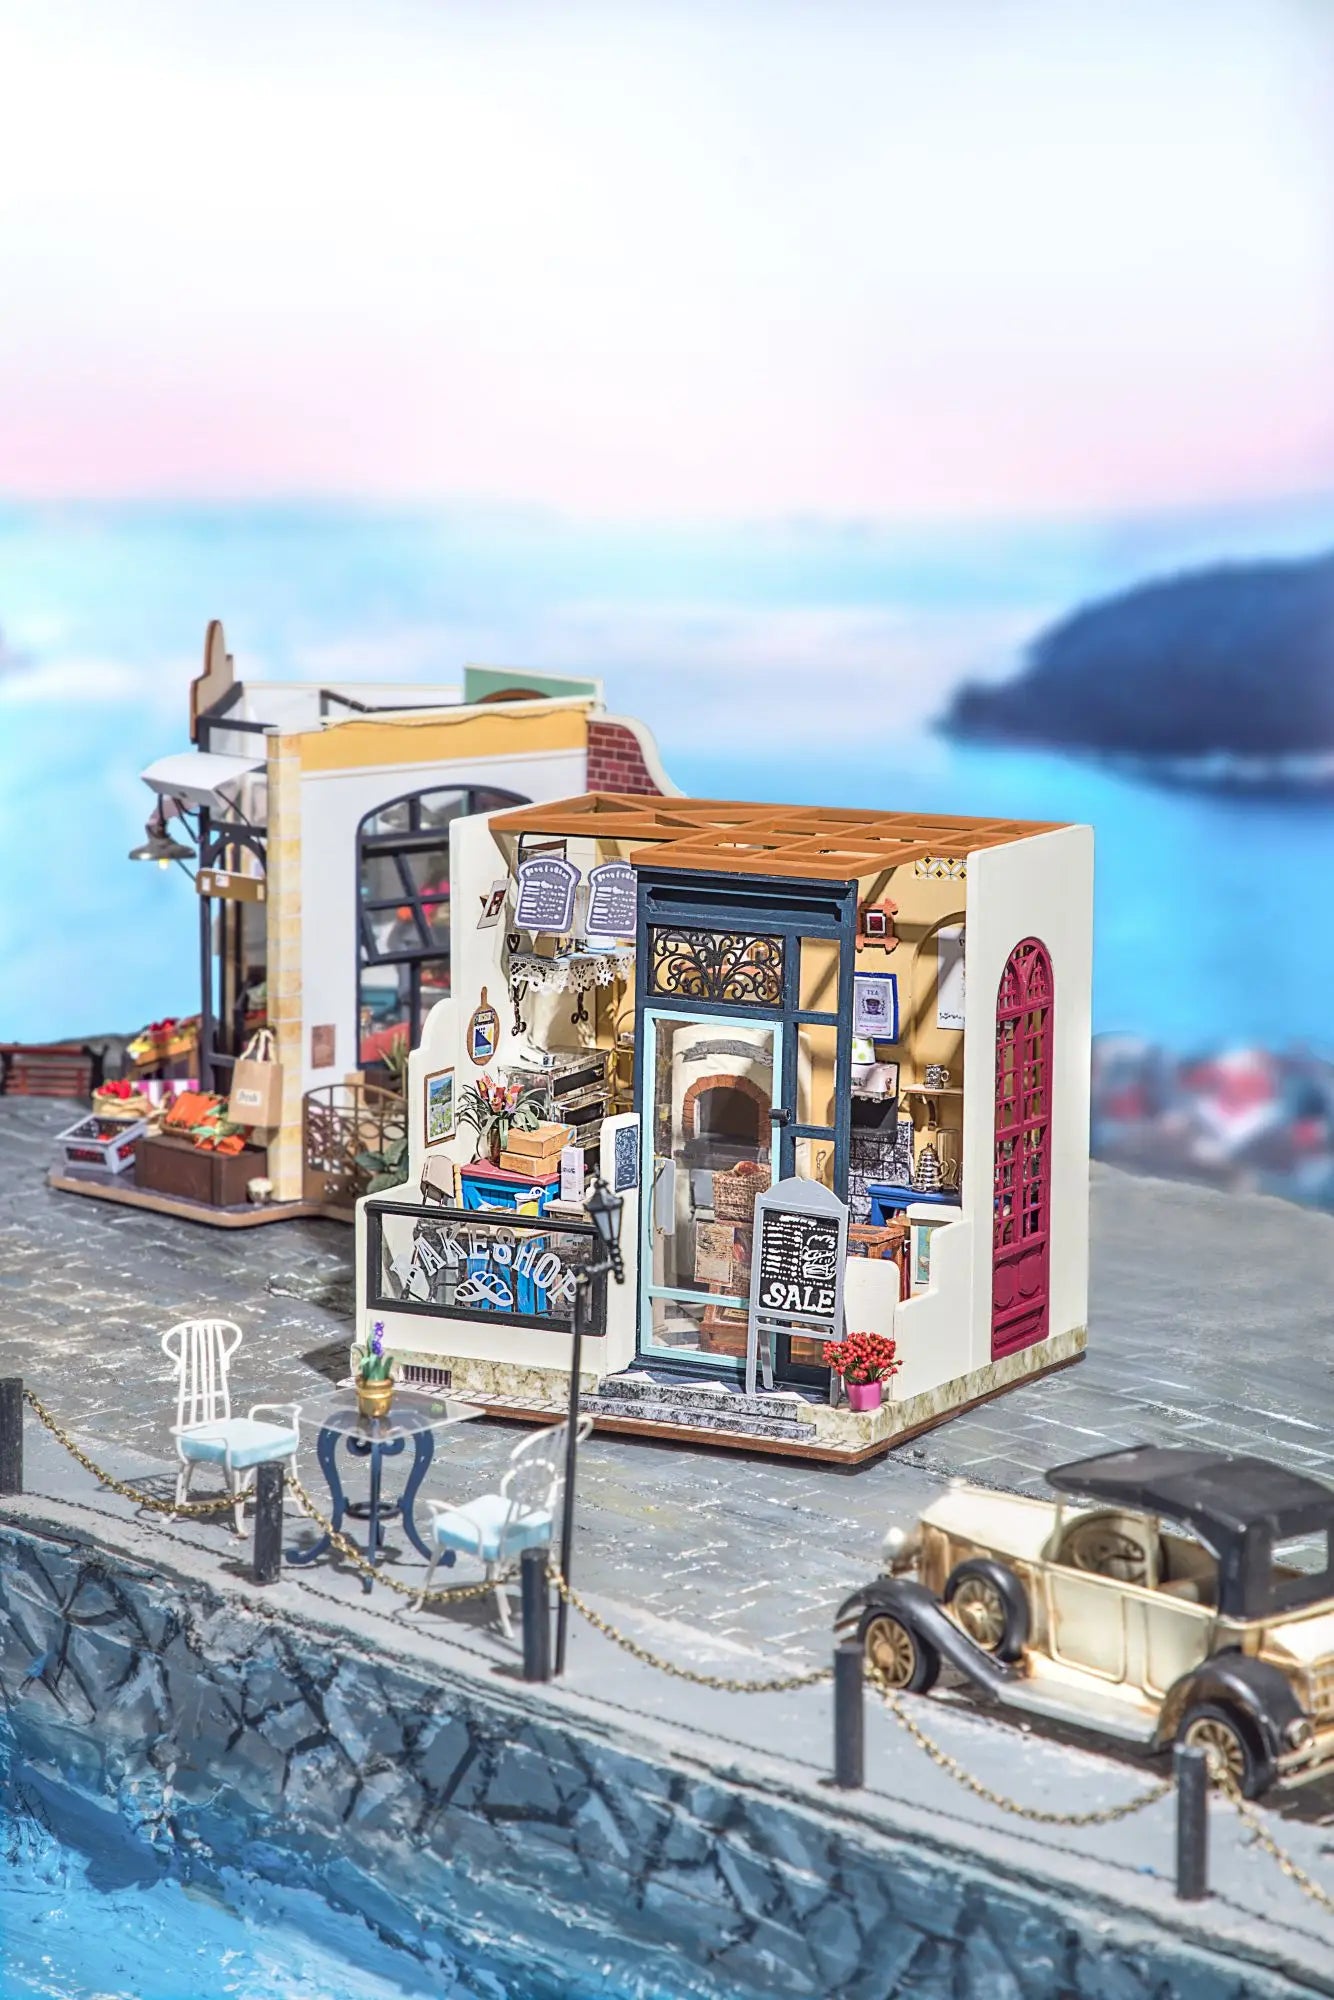 DIY Miniature House Kit- Bake Shop - Moon Room Shop and Wellness